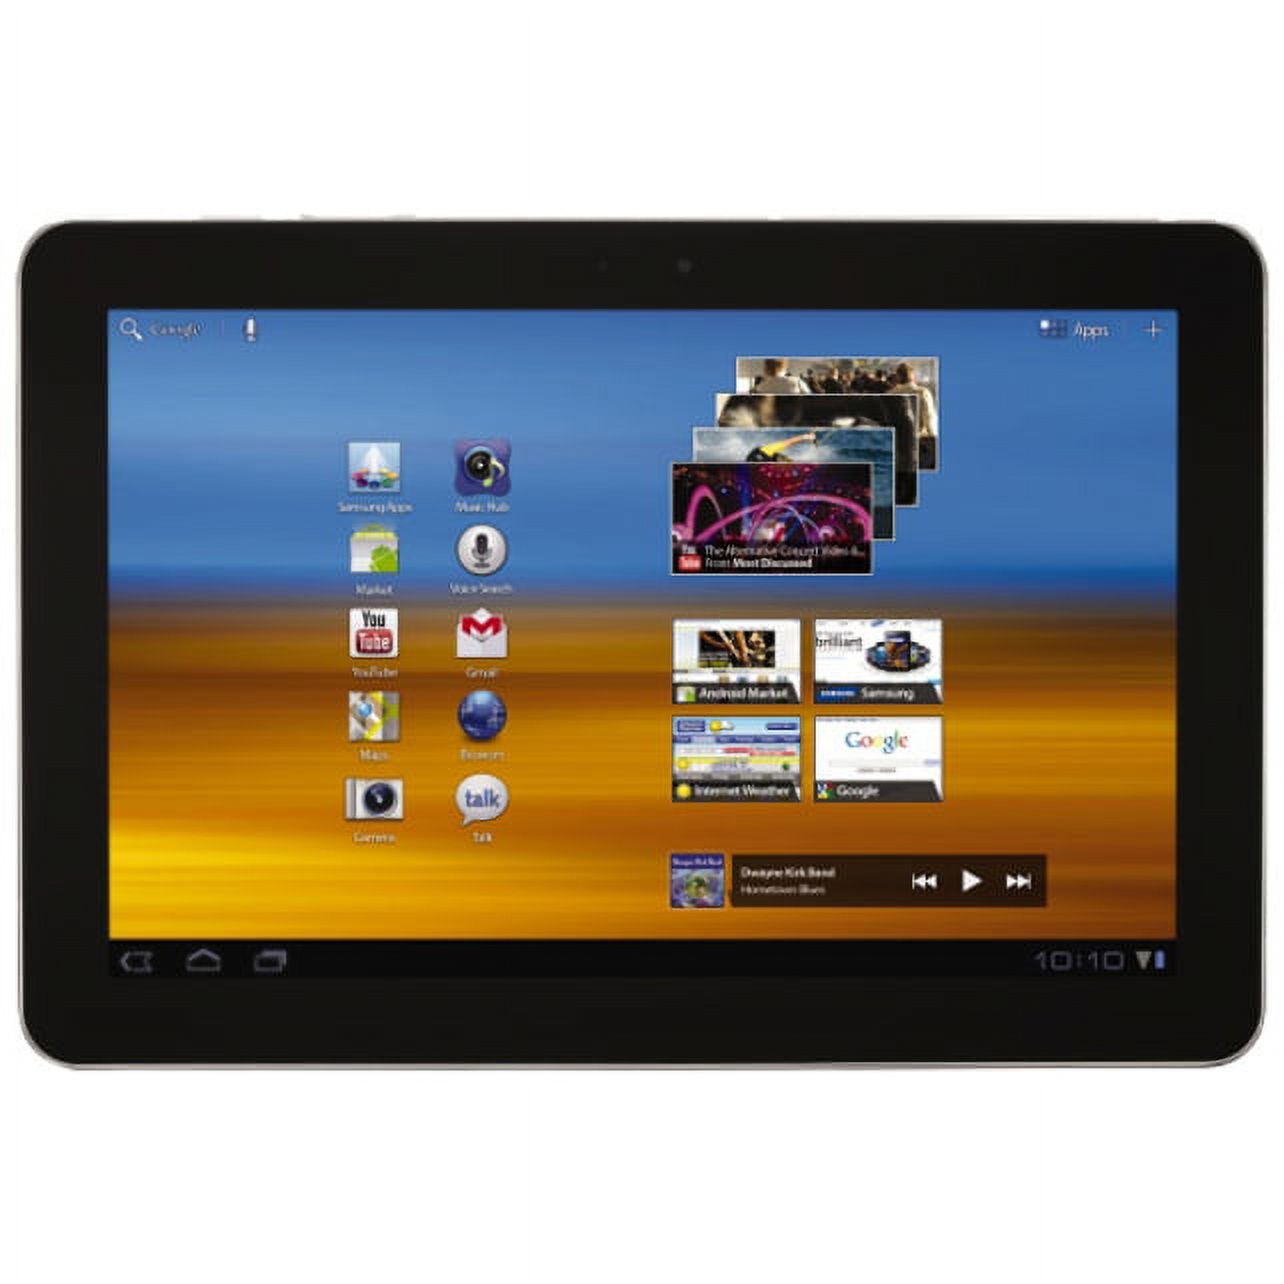 Samsung Galaxy Tab GT-P7510/M16 Tablet, 10.1" WXGA, NVIDIA Tegra 2, 1 GB, 16 GB Storage, Android 3.1 Honeycomb, Metallic Gray - image 1 of 5